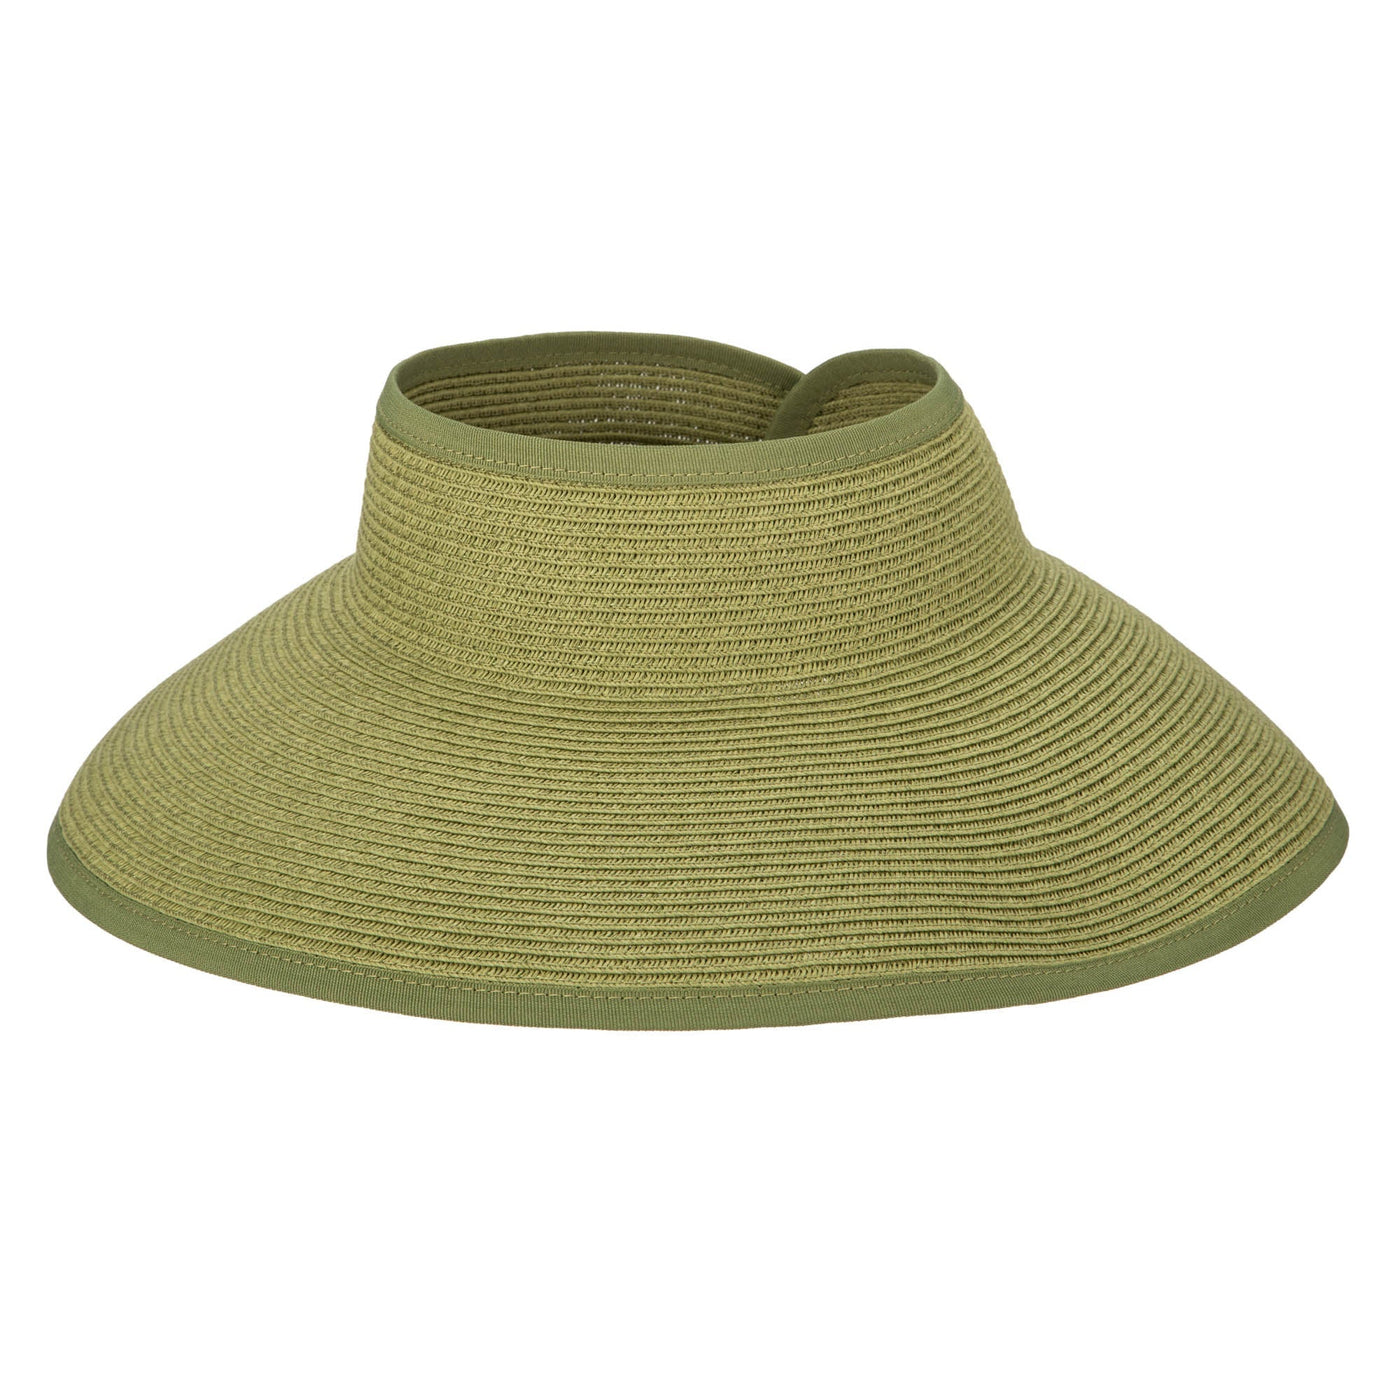 Buy JUANERJIE Women Roll Up Straw Sun Visor Hat, Wide Brim